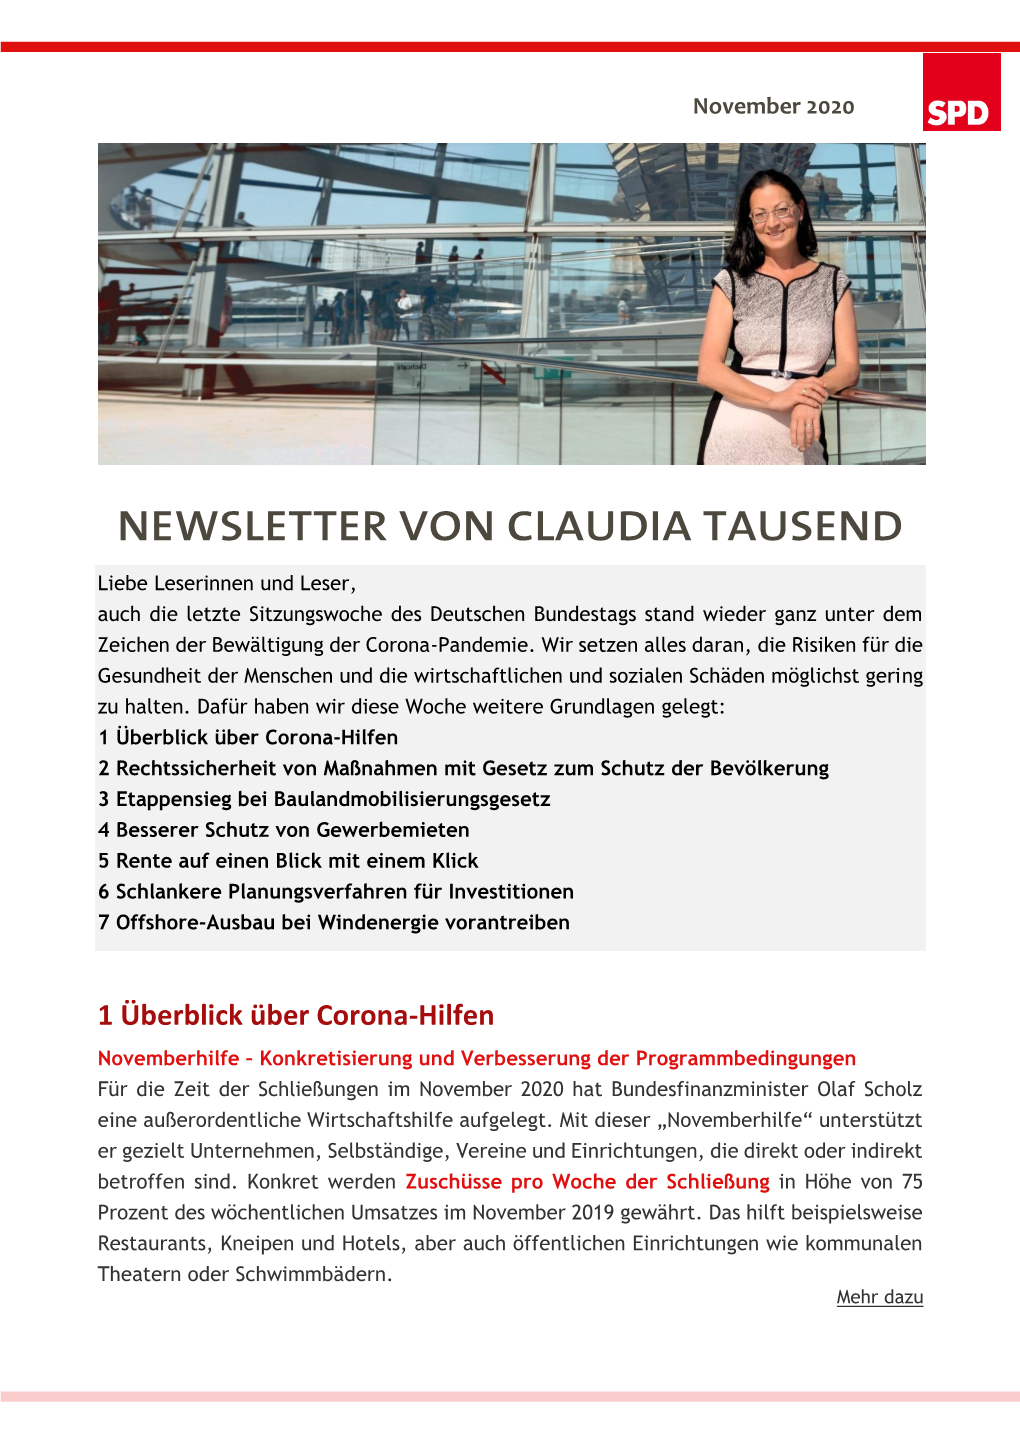 Newsletter Claudia Tausend November 2020